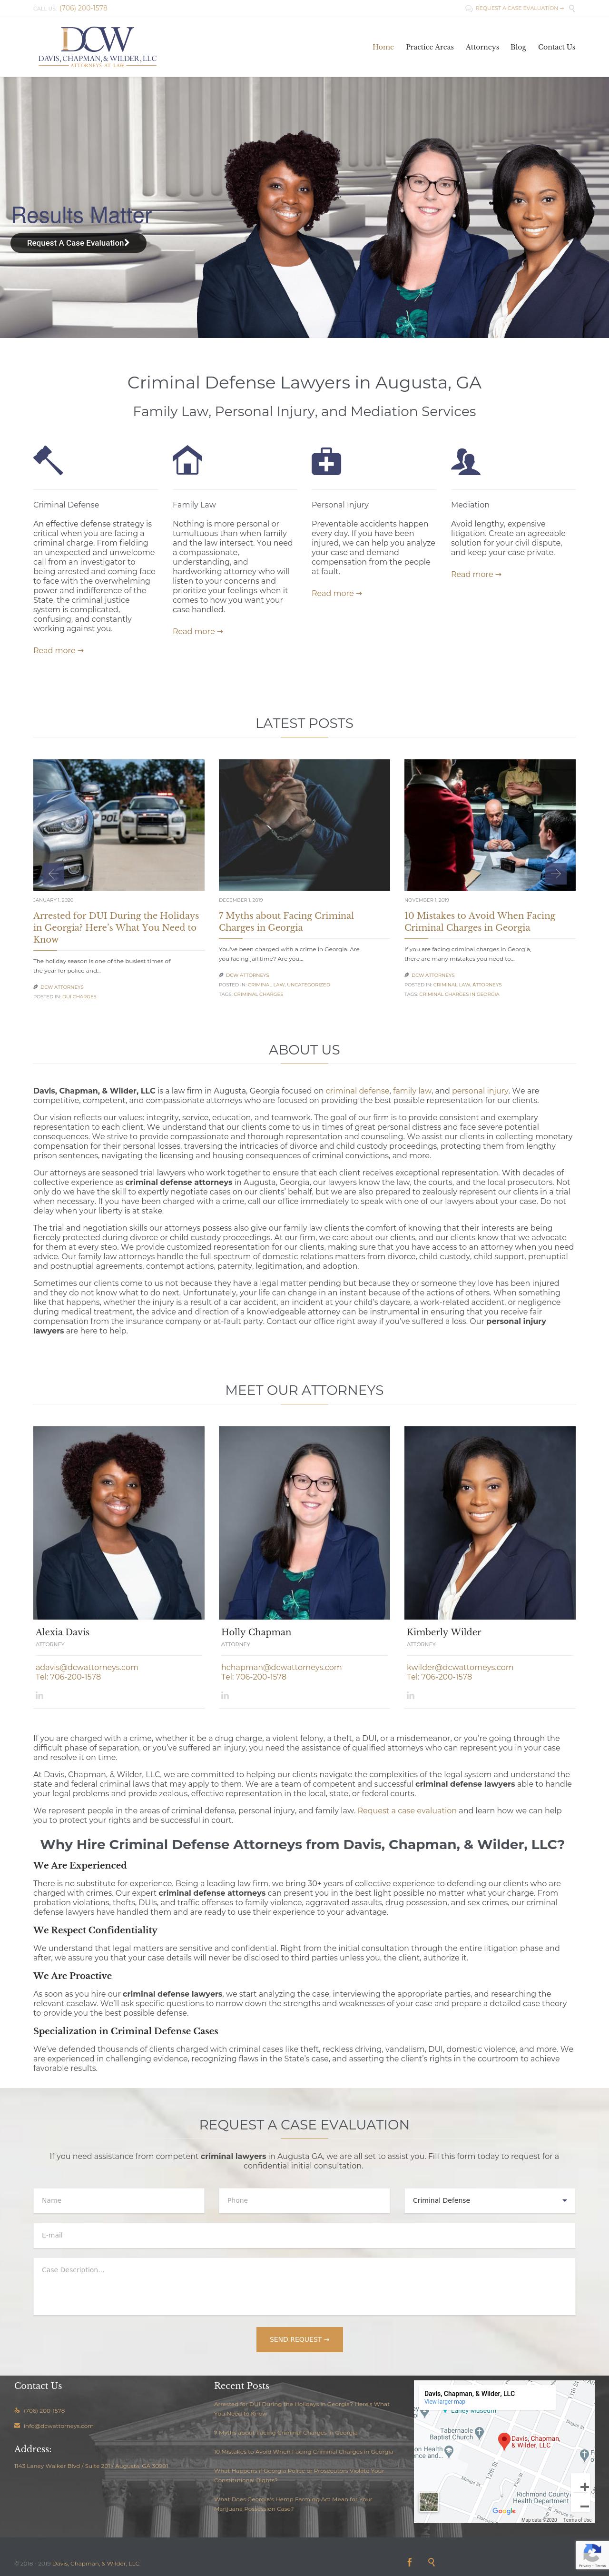 Davis, Chapman & Wilder LLC - Augusta GA Lawyers